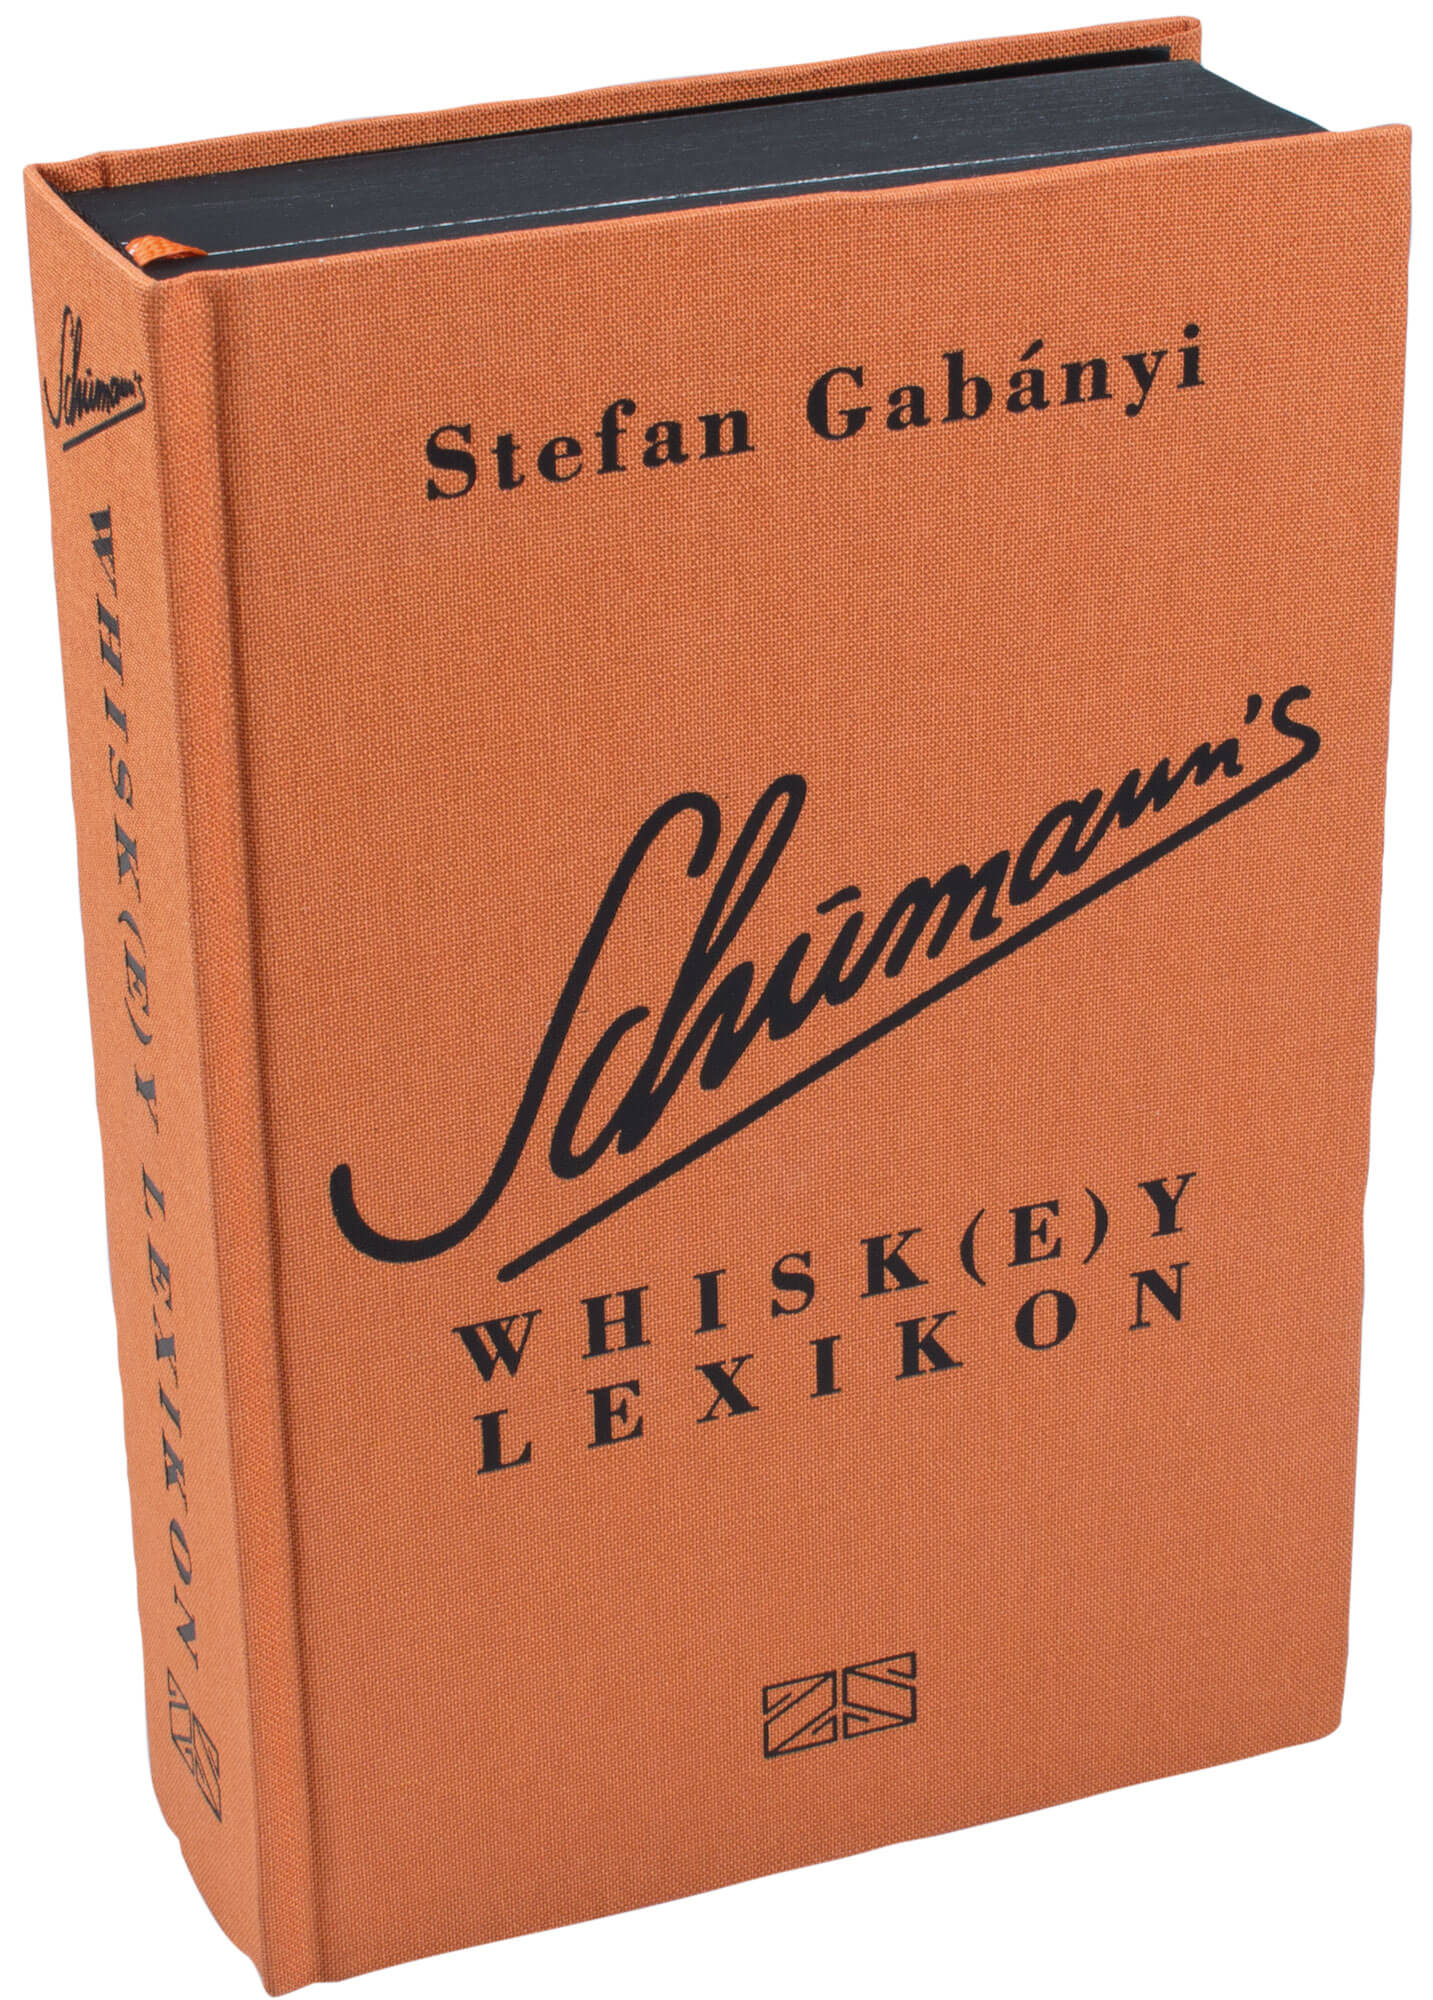 Whisk(e)y dictionary - Charles Schumann/Stefan Gabányi